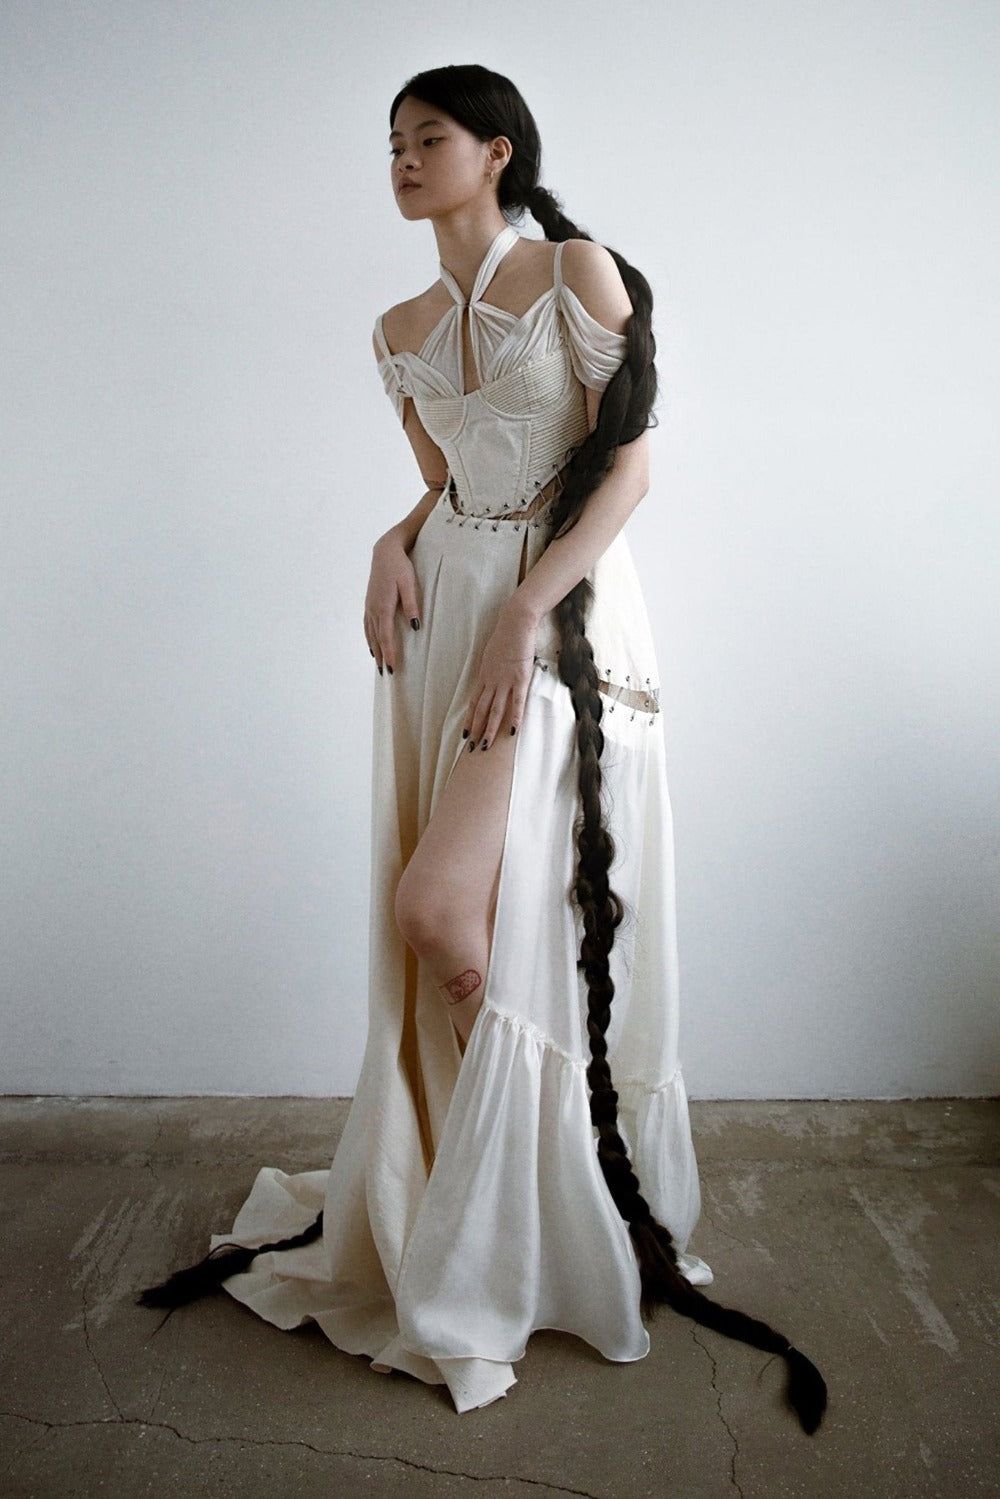 viking wedding dress